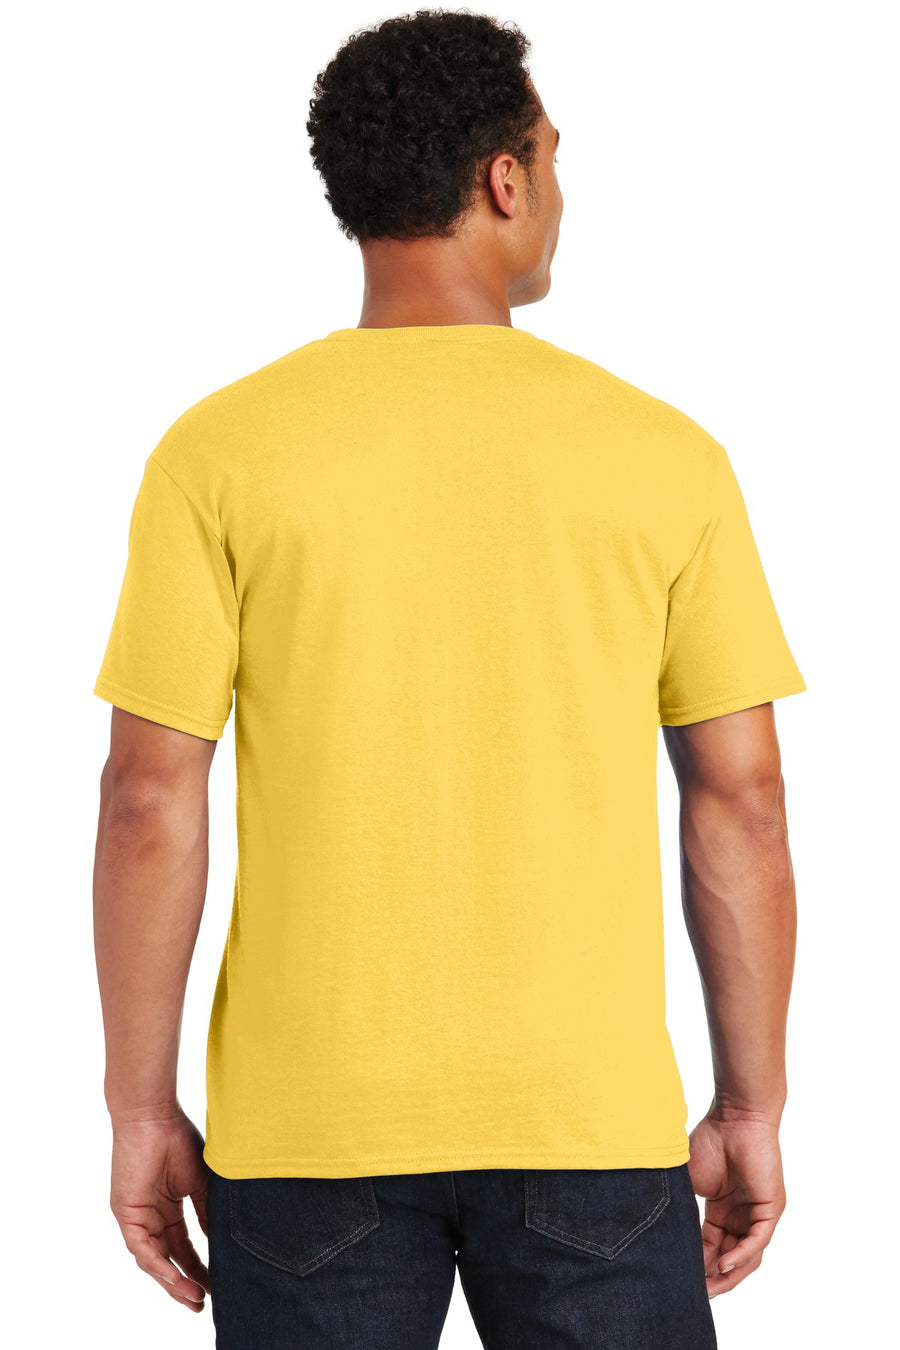 29M-Island Yellow-back_model